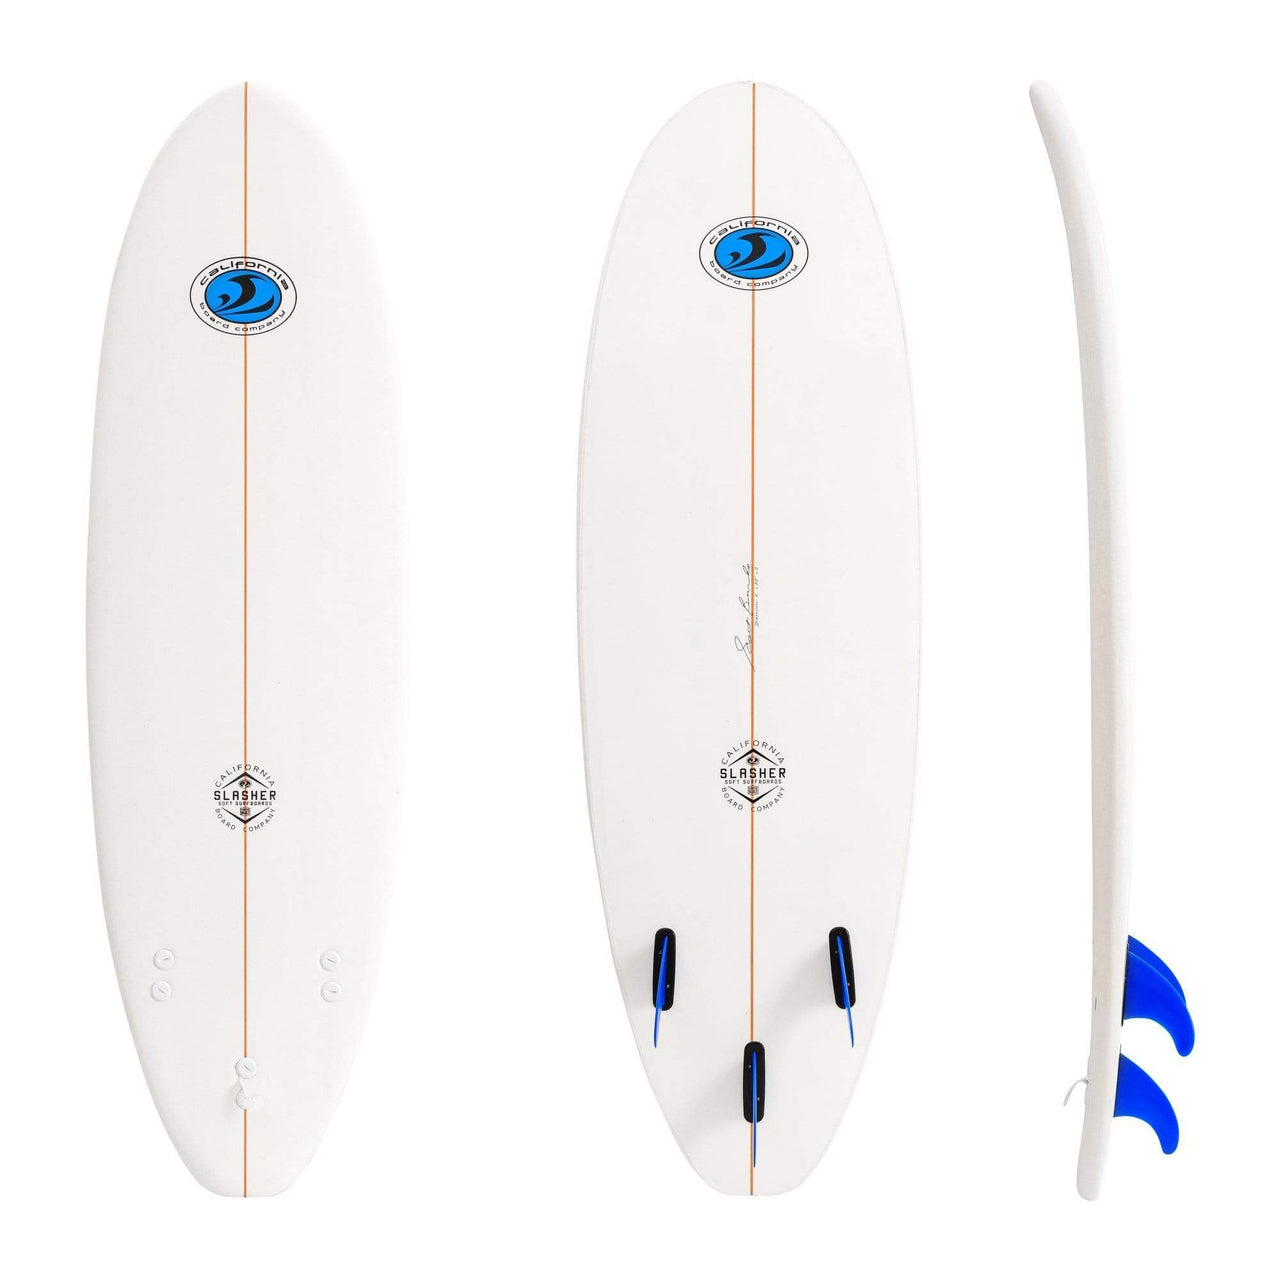 CBC 6' Slasher Foam Surfboard Soft Top | Good Wave